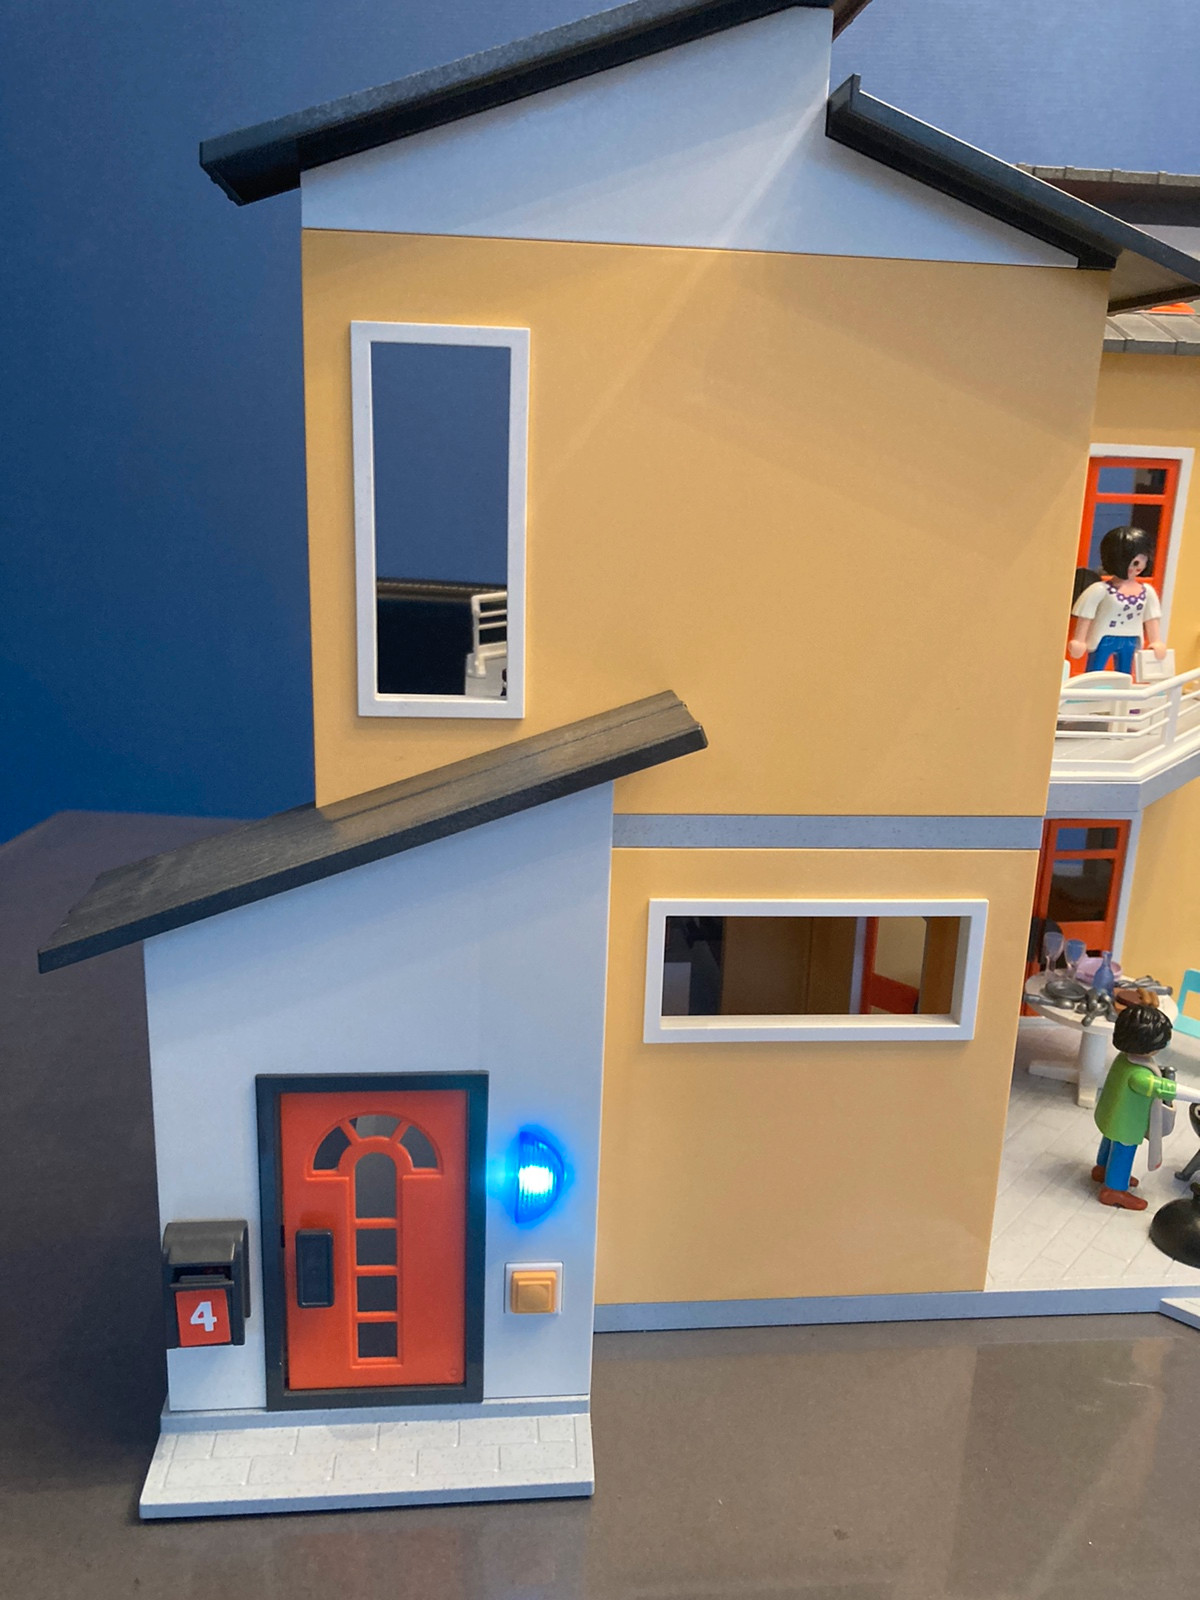 Maison moderne Playmobil 9266